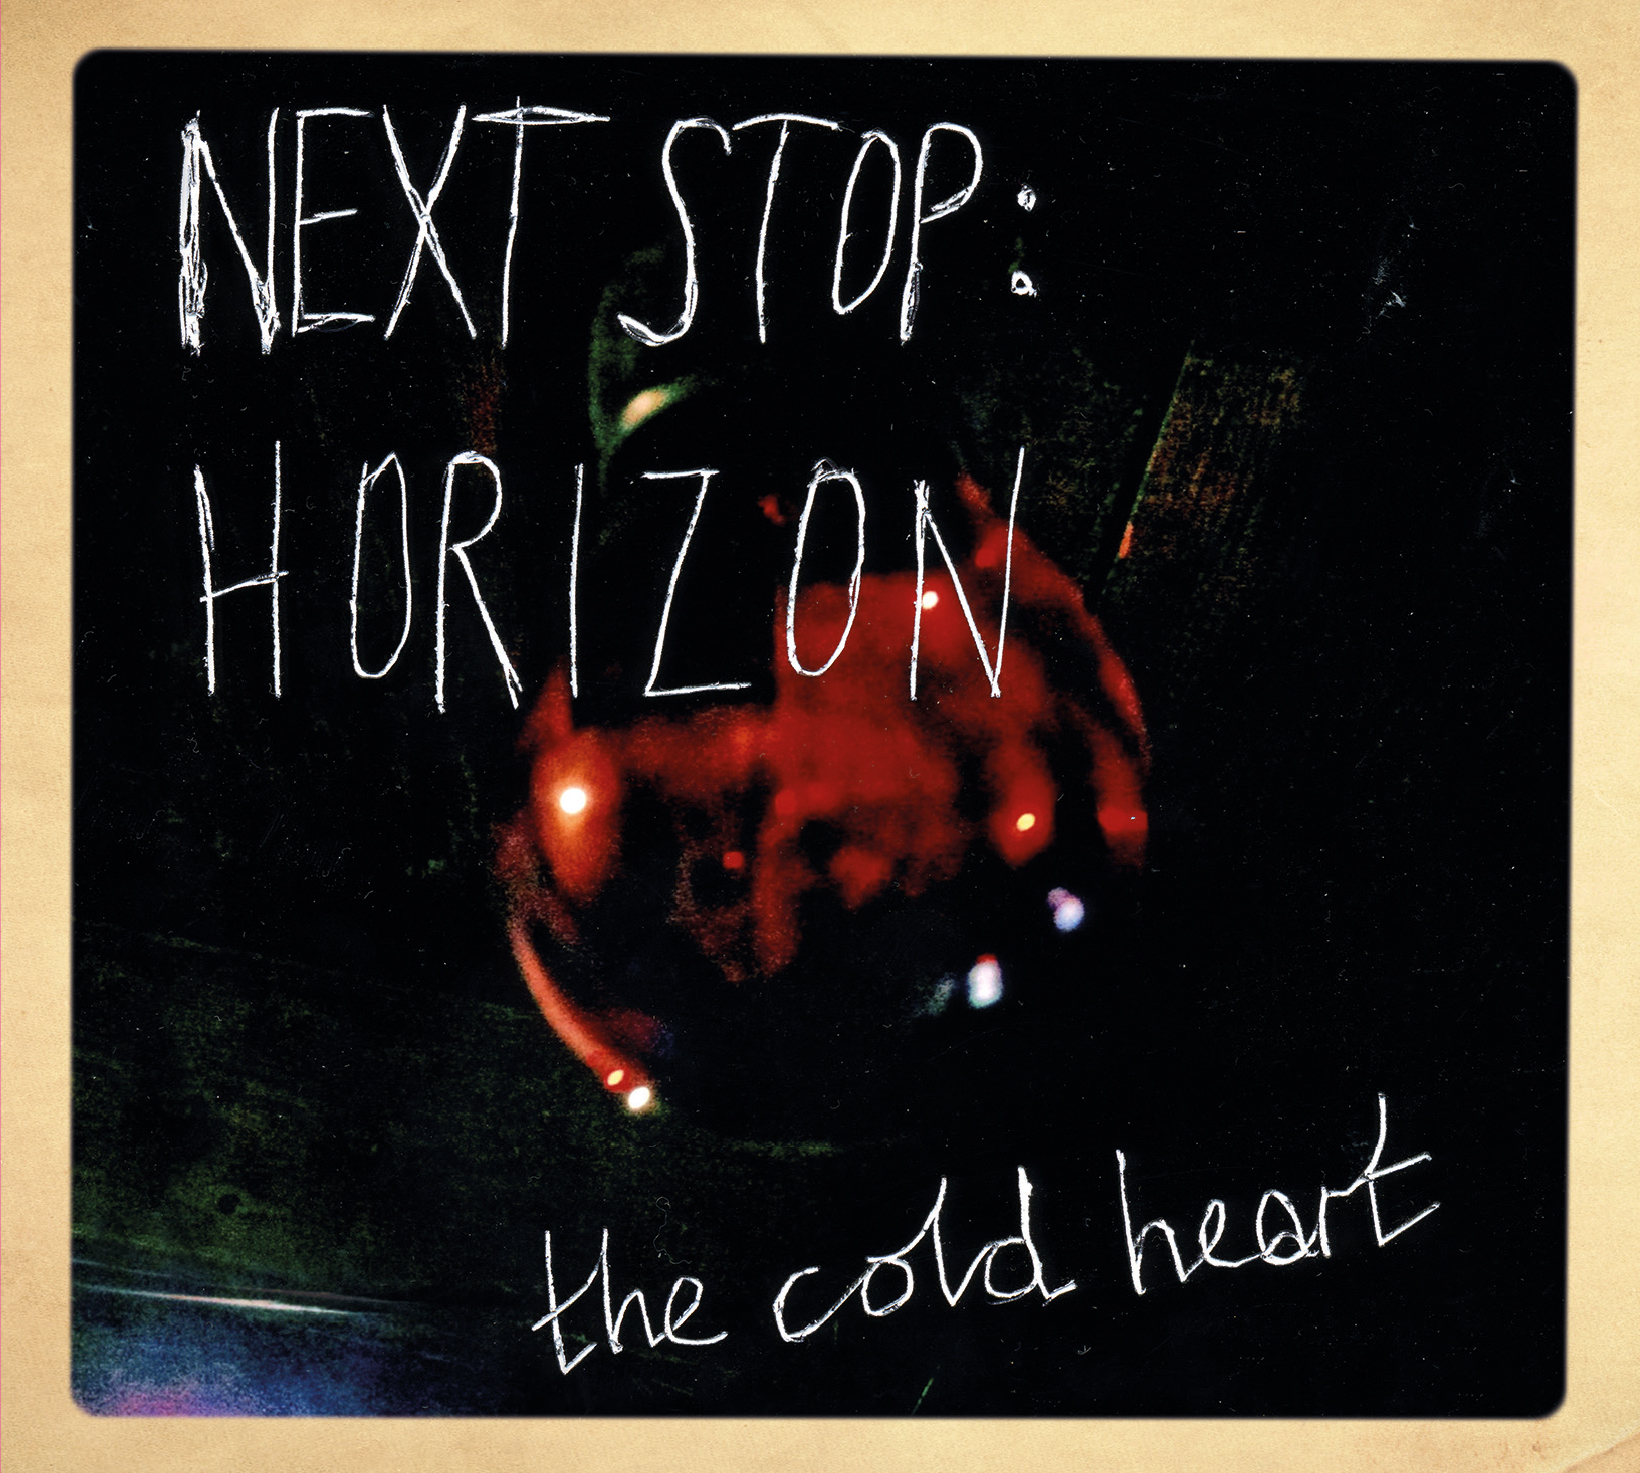 Next Stop: Horizon - The Cold Heart